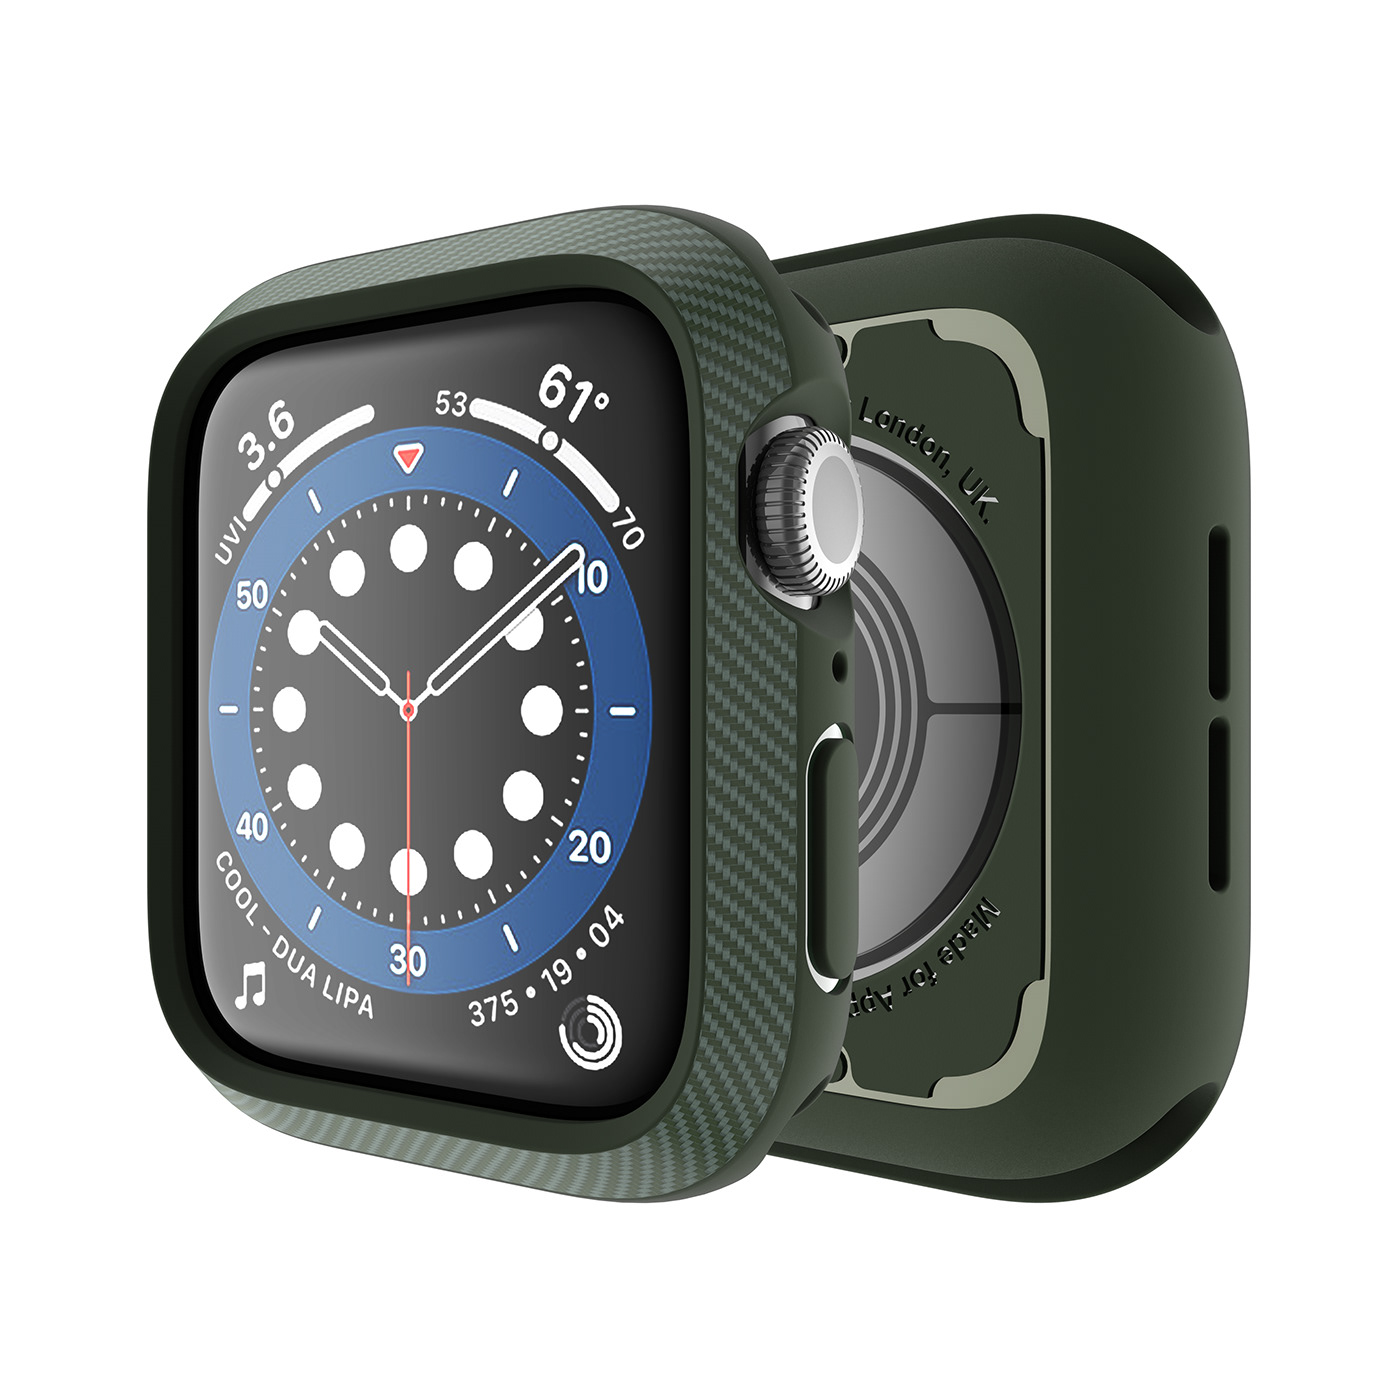 apple case industrialdesign iphone iwatch iwatchcase Mobilecase productdesign